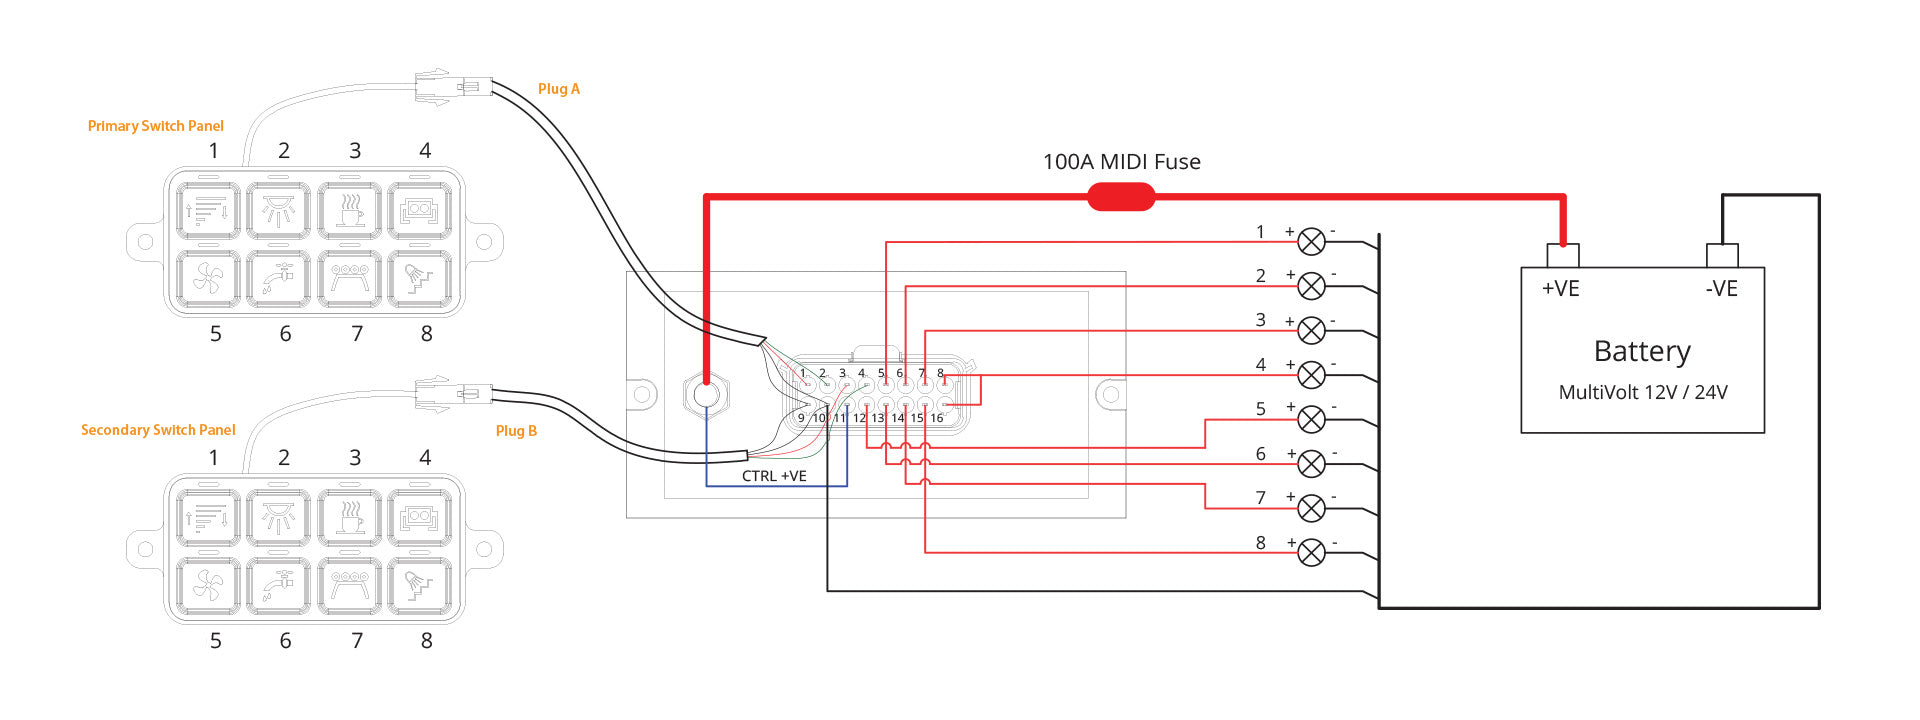 Switch Master 8 - Wiring Diagram